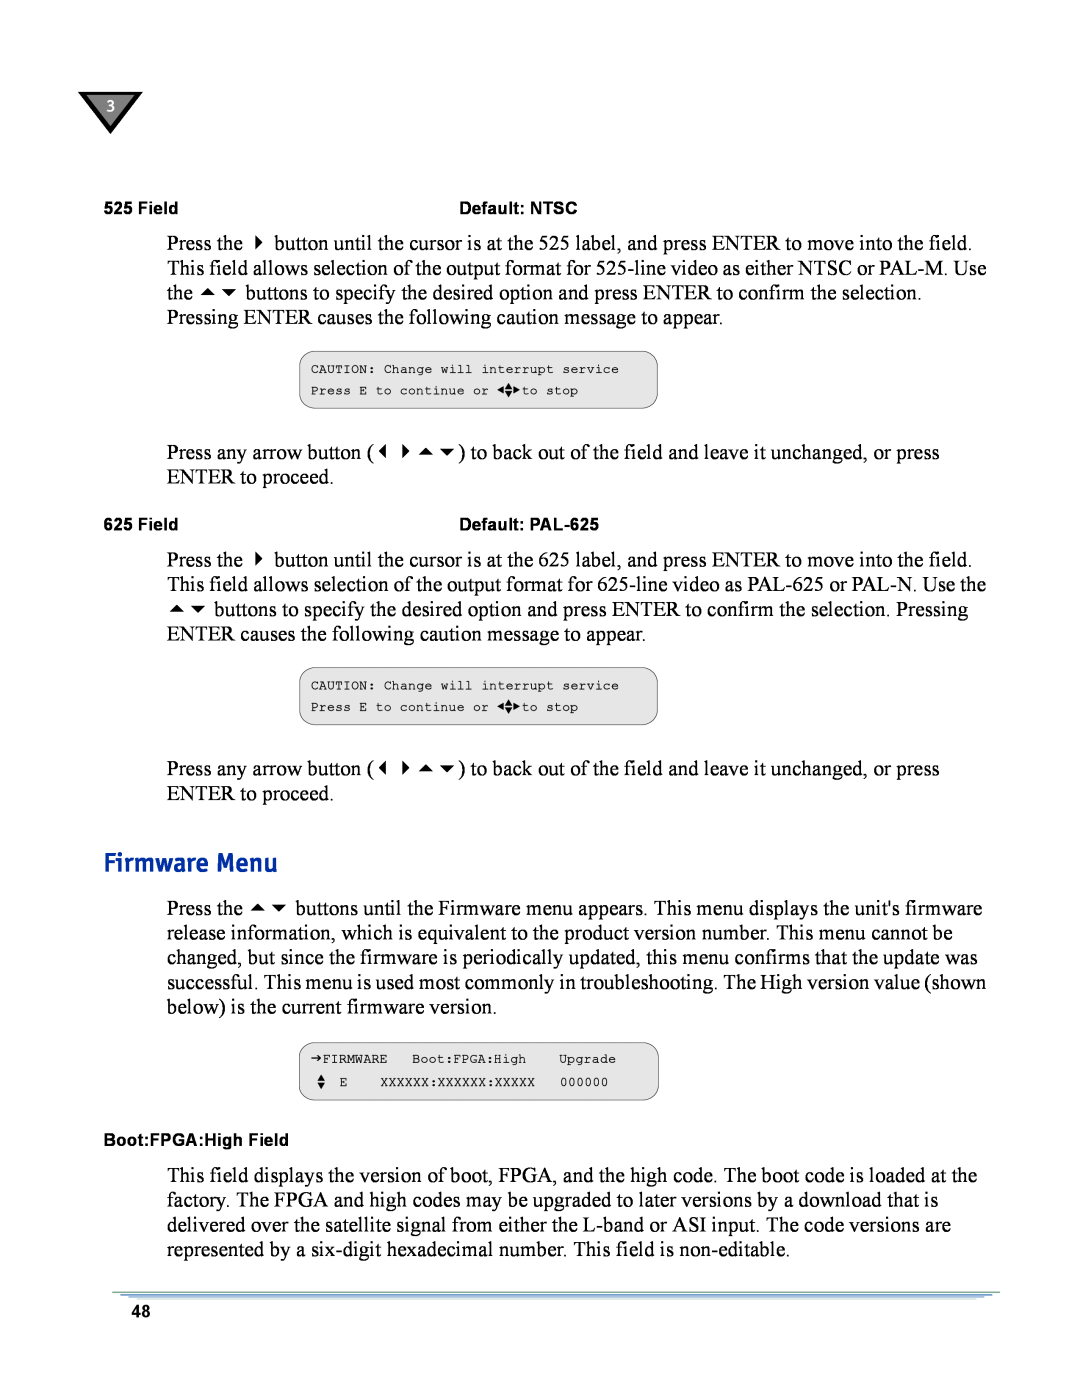 Motorola DSR-6400 manual Firmware Menu, Default NTSC, Default PAL-625, Boot FPGA High Field 